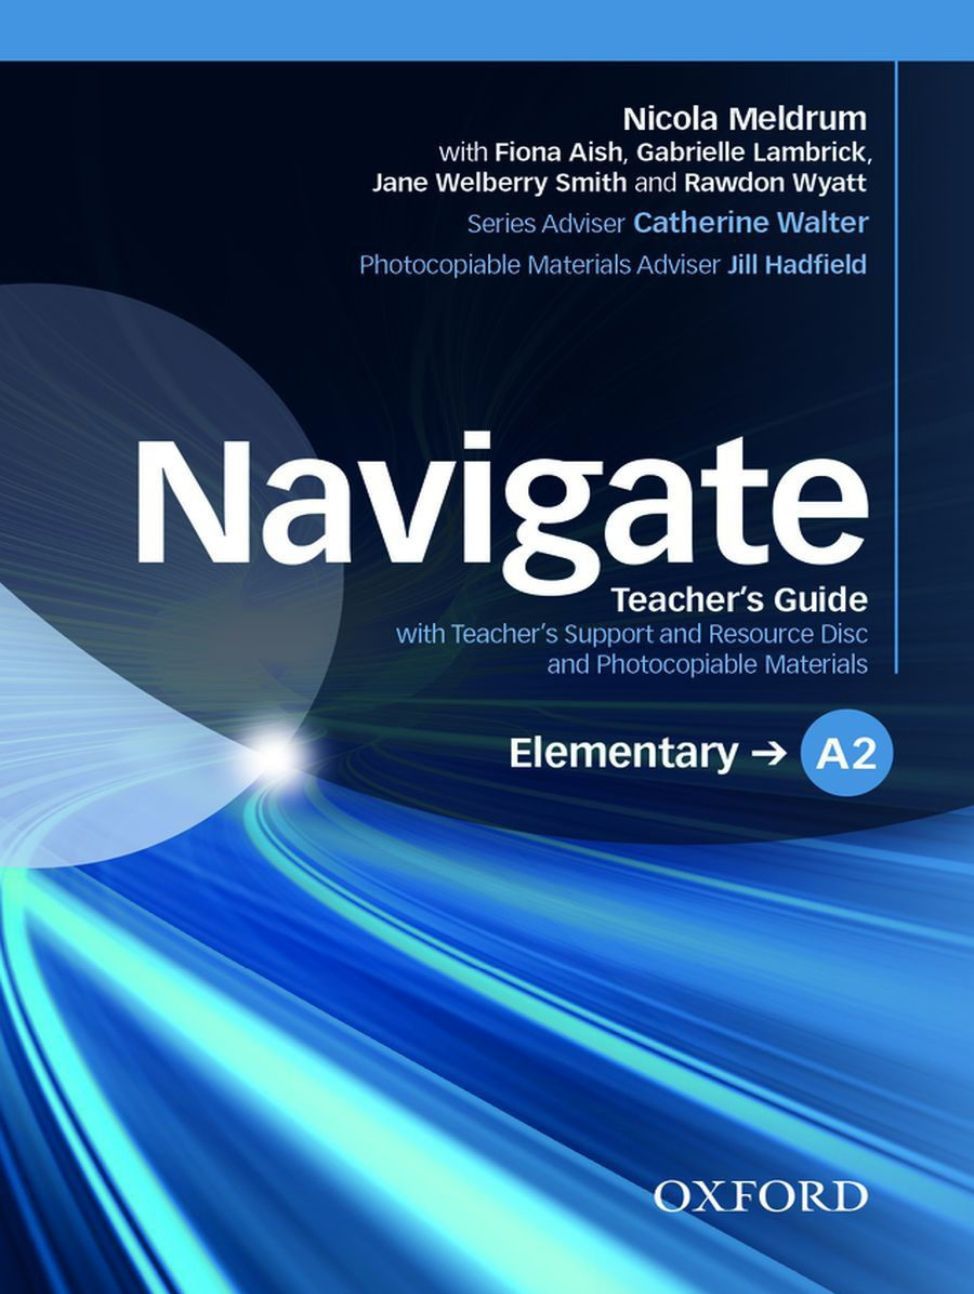 Navigate elementary. Navigate Workbook a2 Elementary. Navigate a2 Elementary Coursebook. Navigate books. Navigate Elementary Workbook.